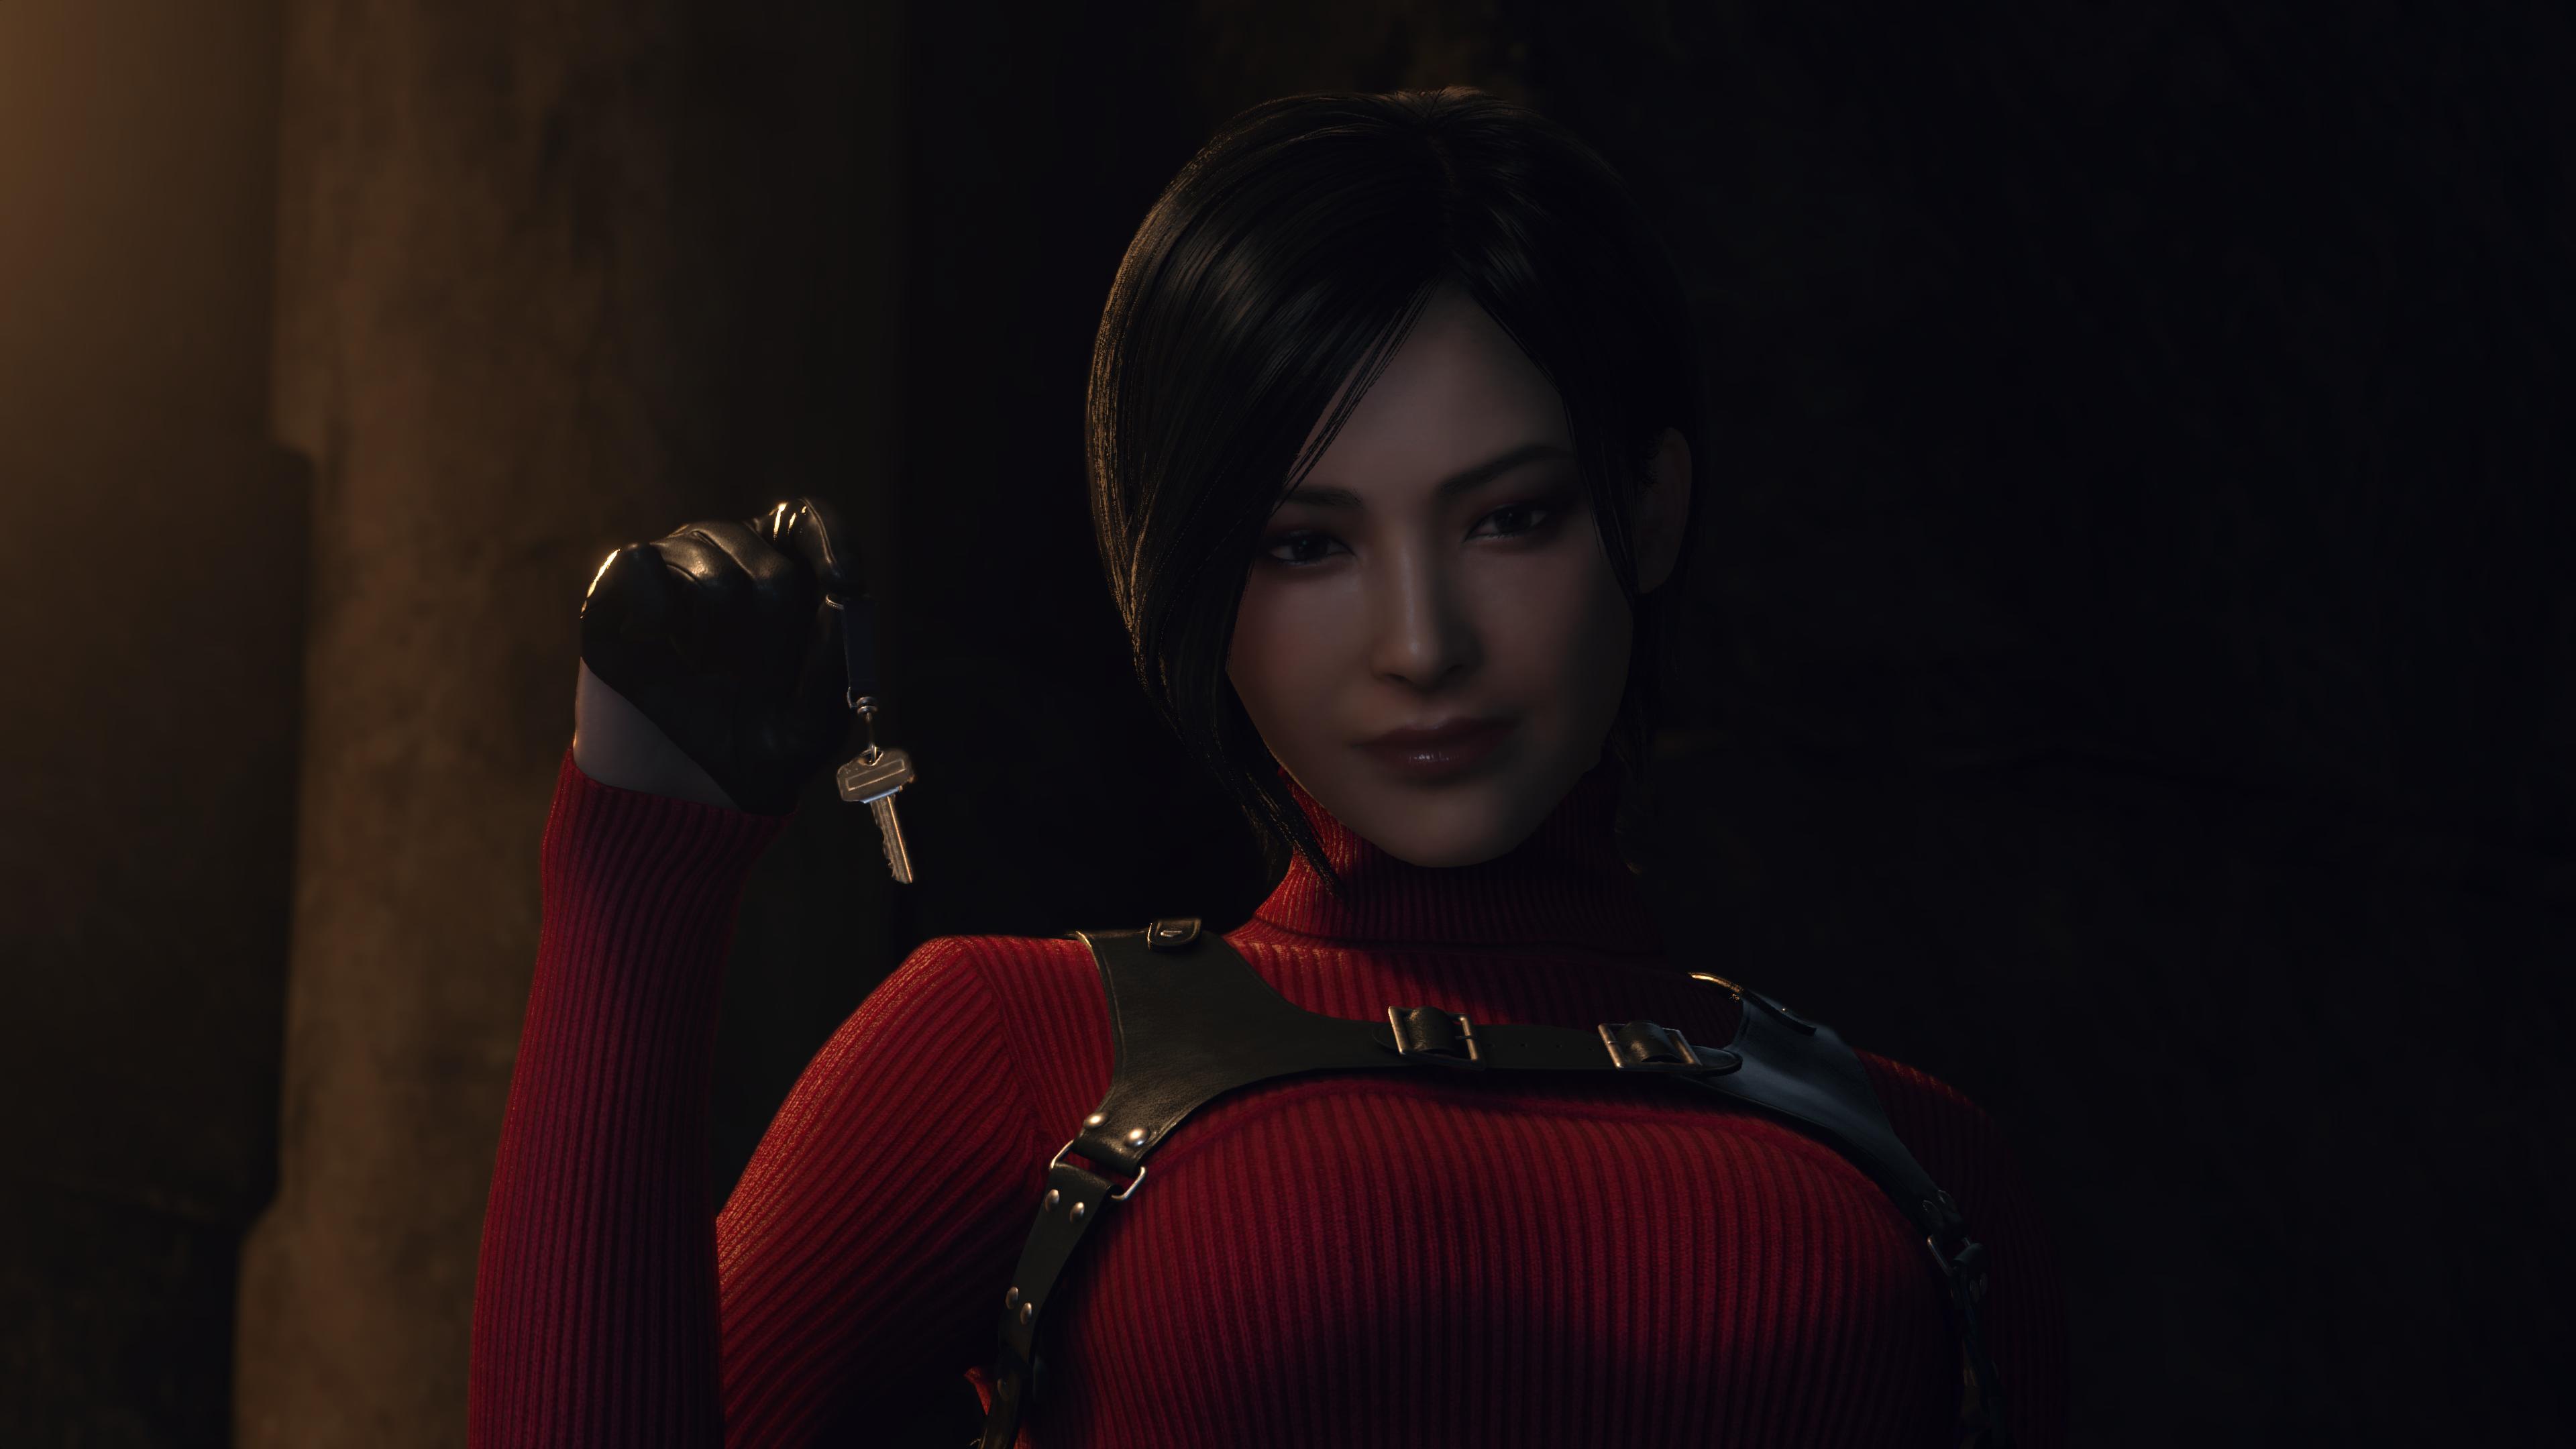 Resident Evil 4 DLC could be soon as Capcom makes subtle Steam change